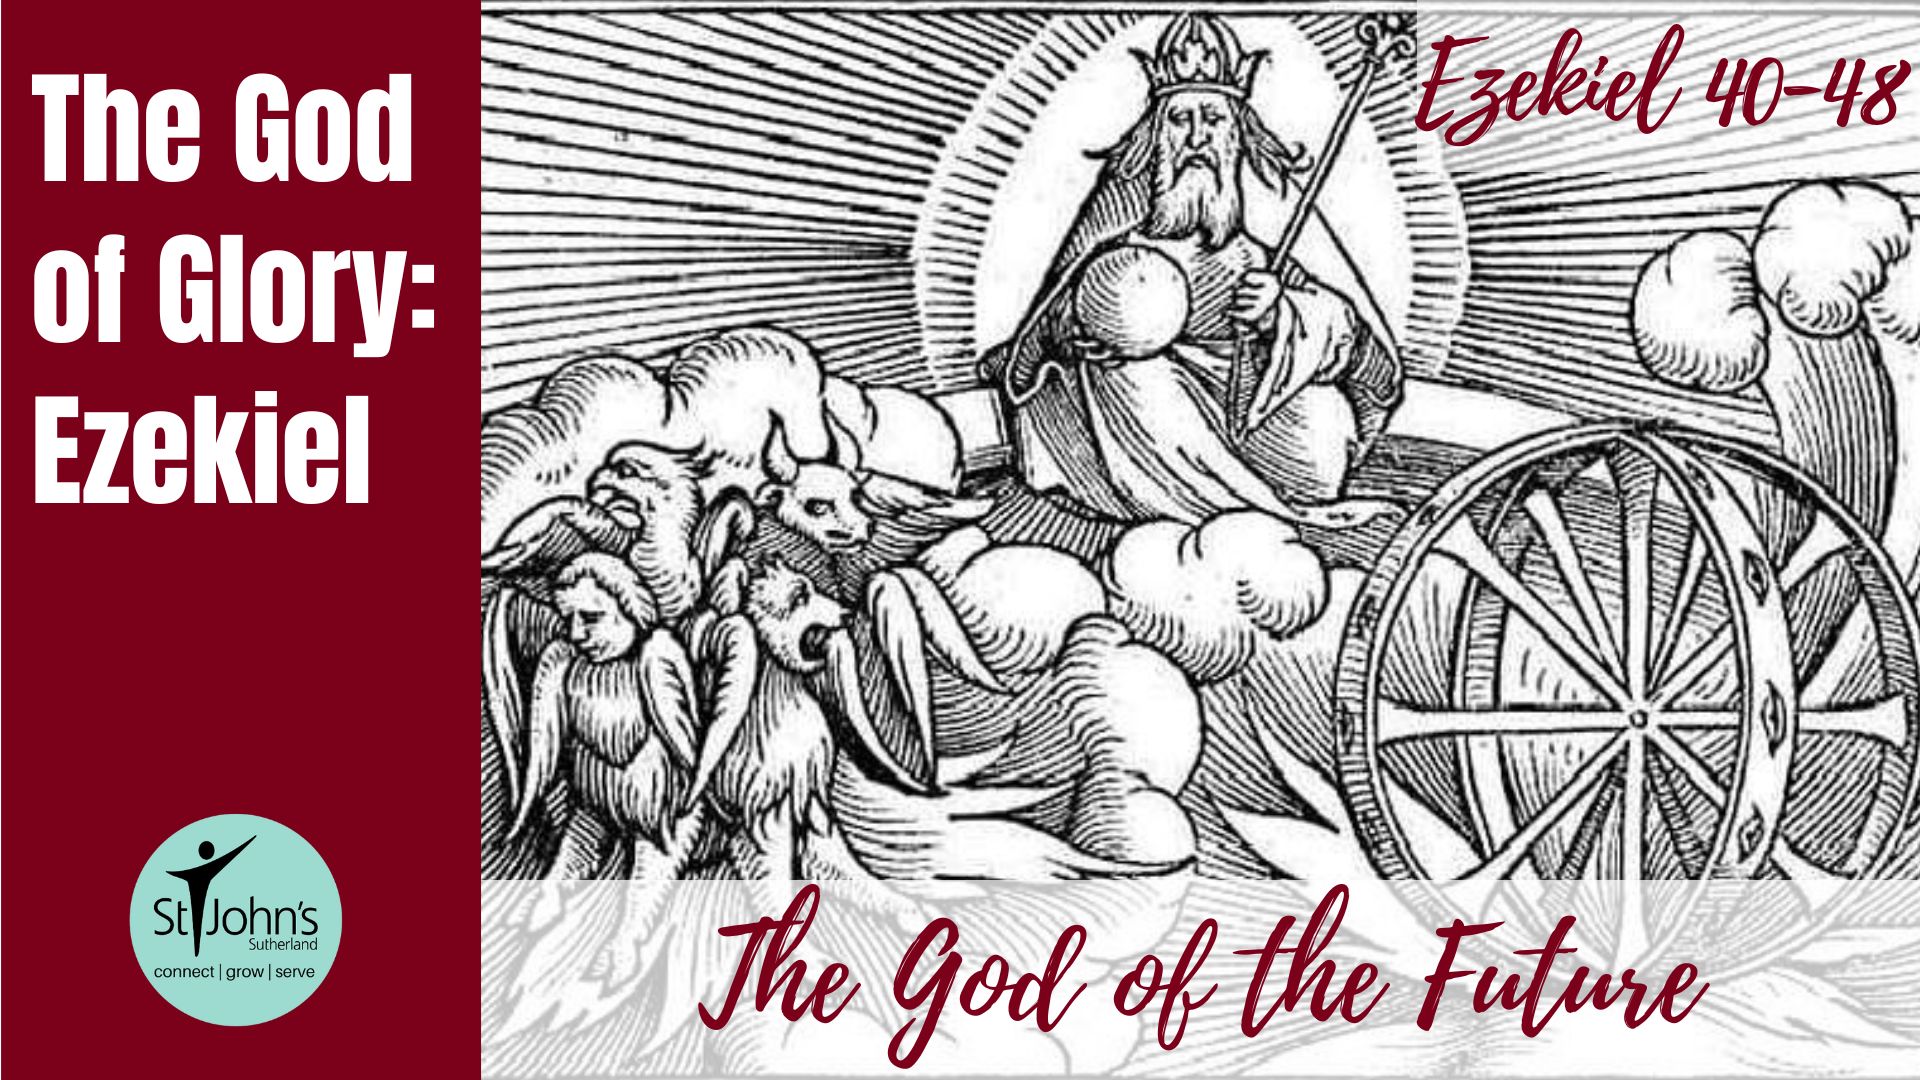 The God of the Future: Ezekiel 40-48